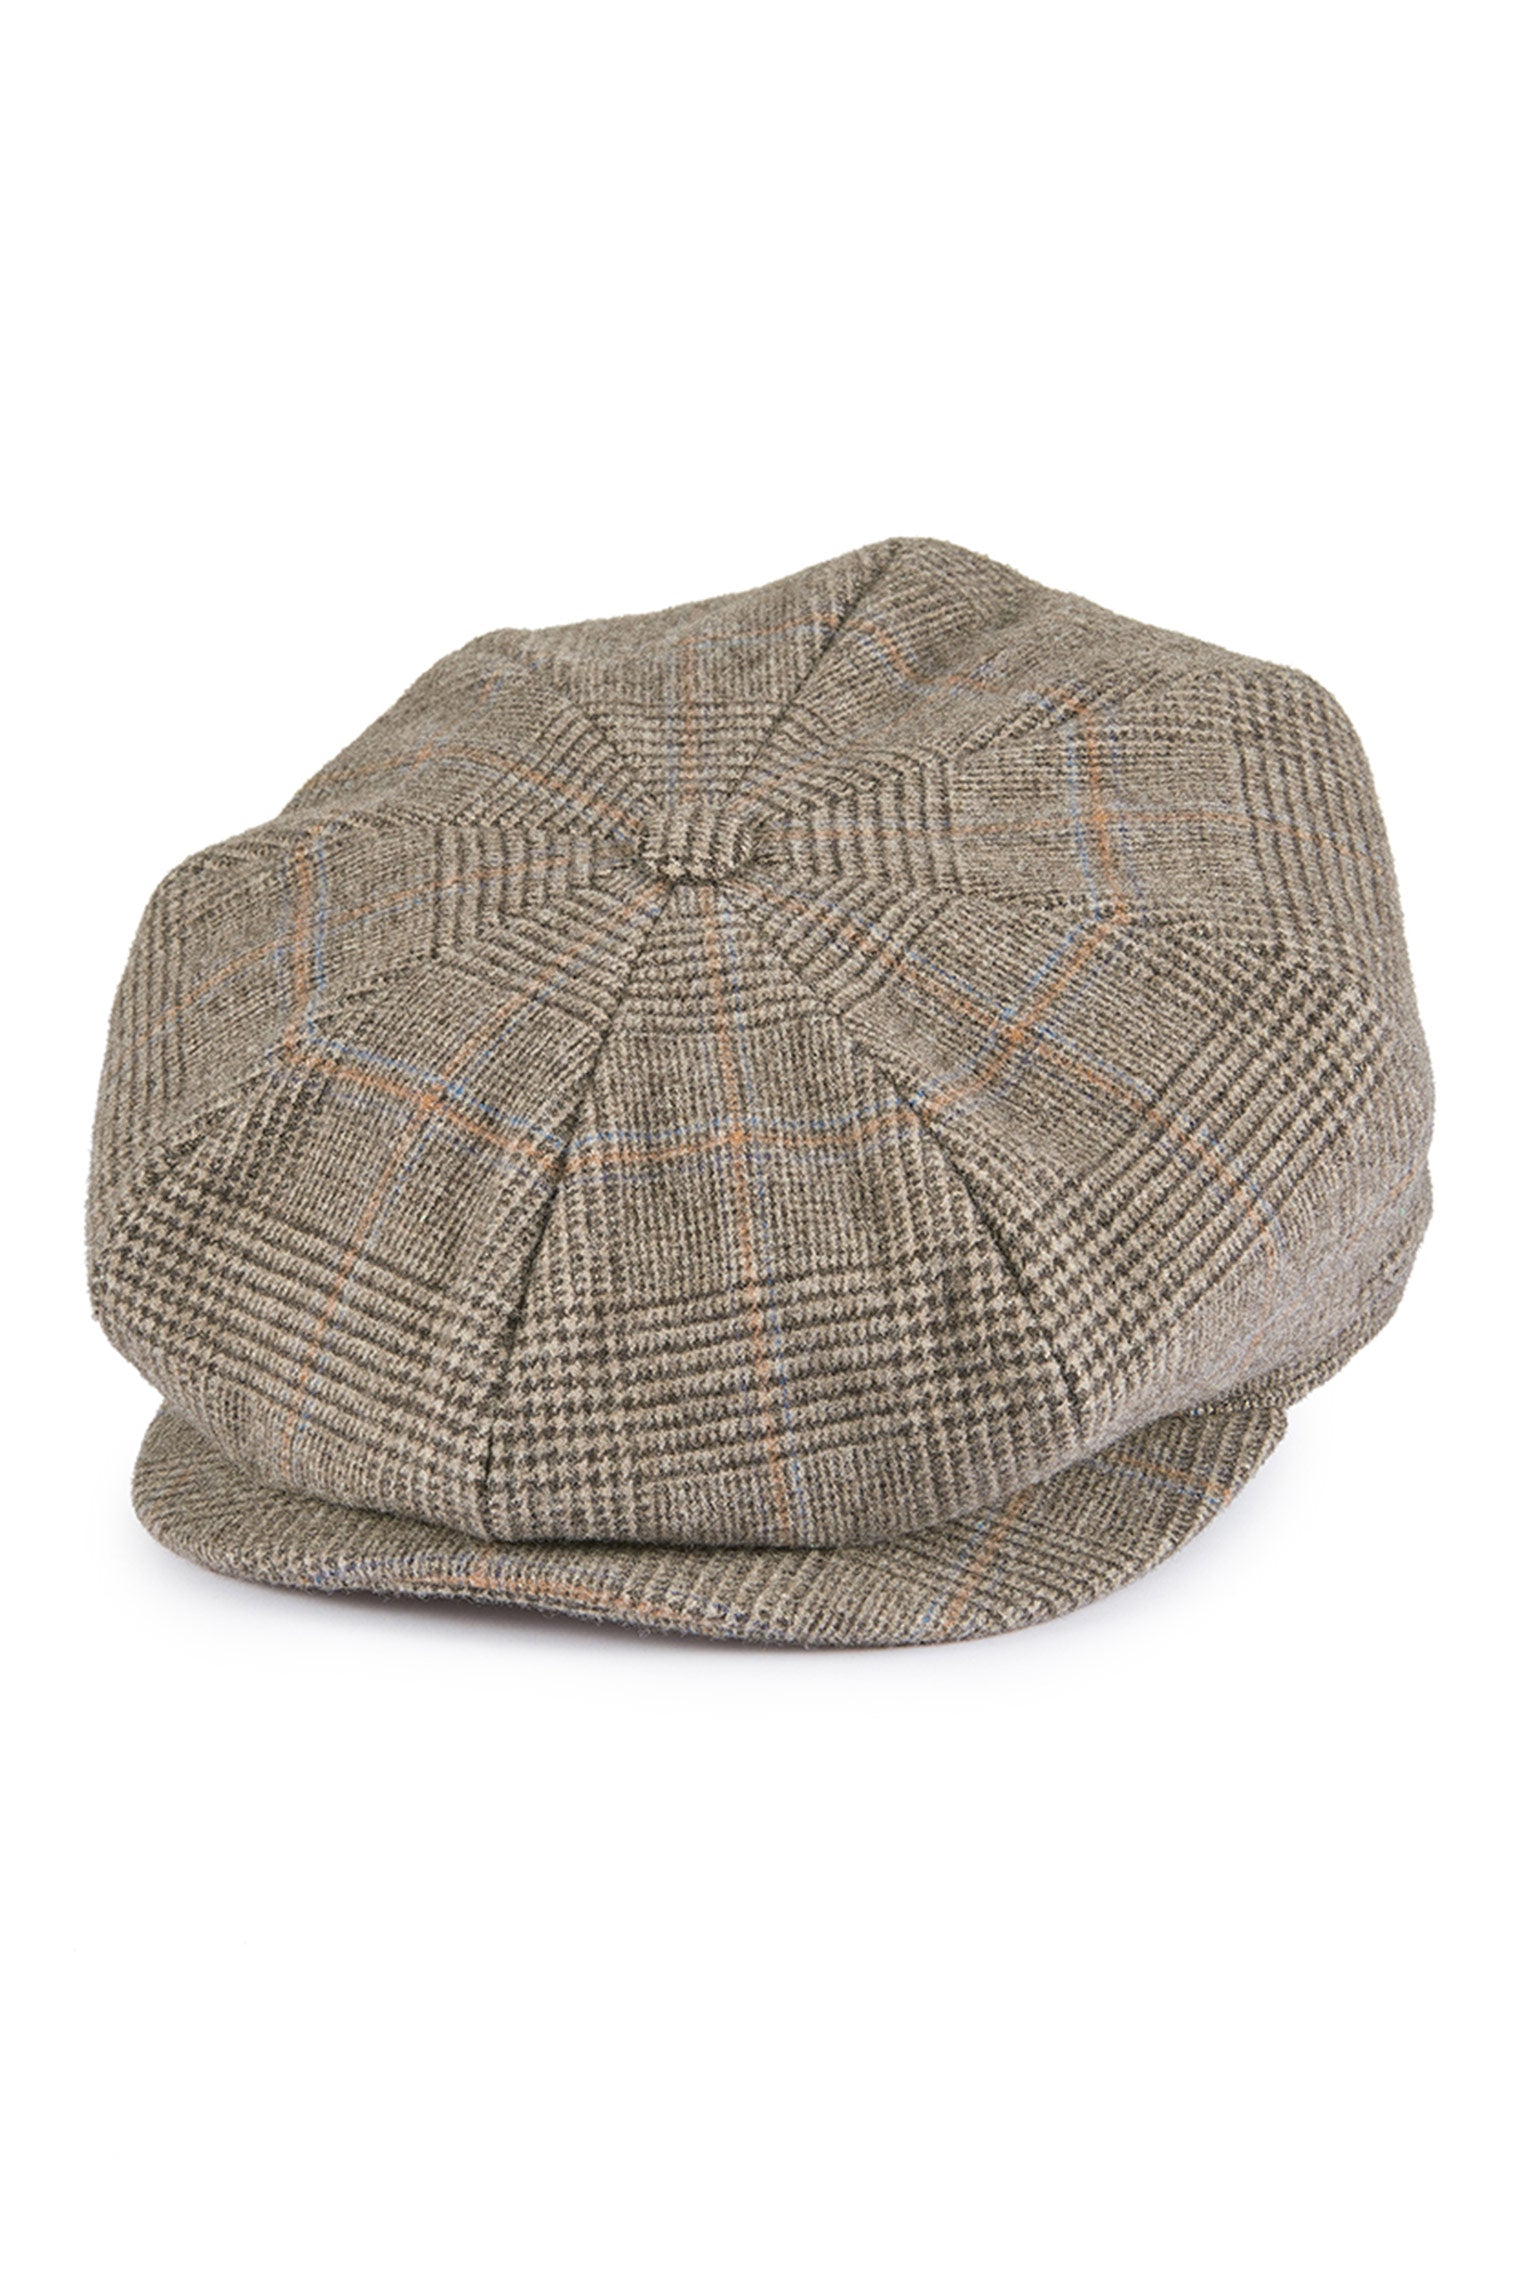 Escorial Wool Tremelo Bakerboy Cap - Men's Bakerboy Caps - Lock & Co. Hatters London UK